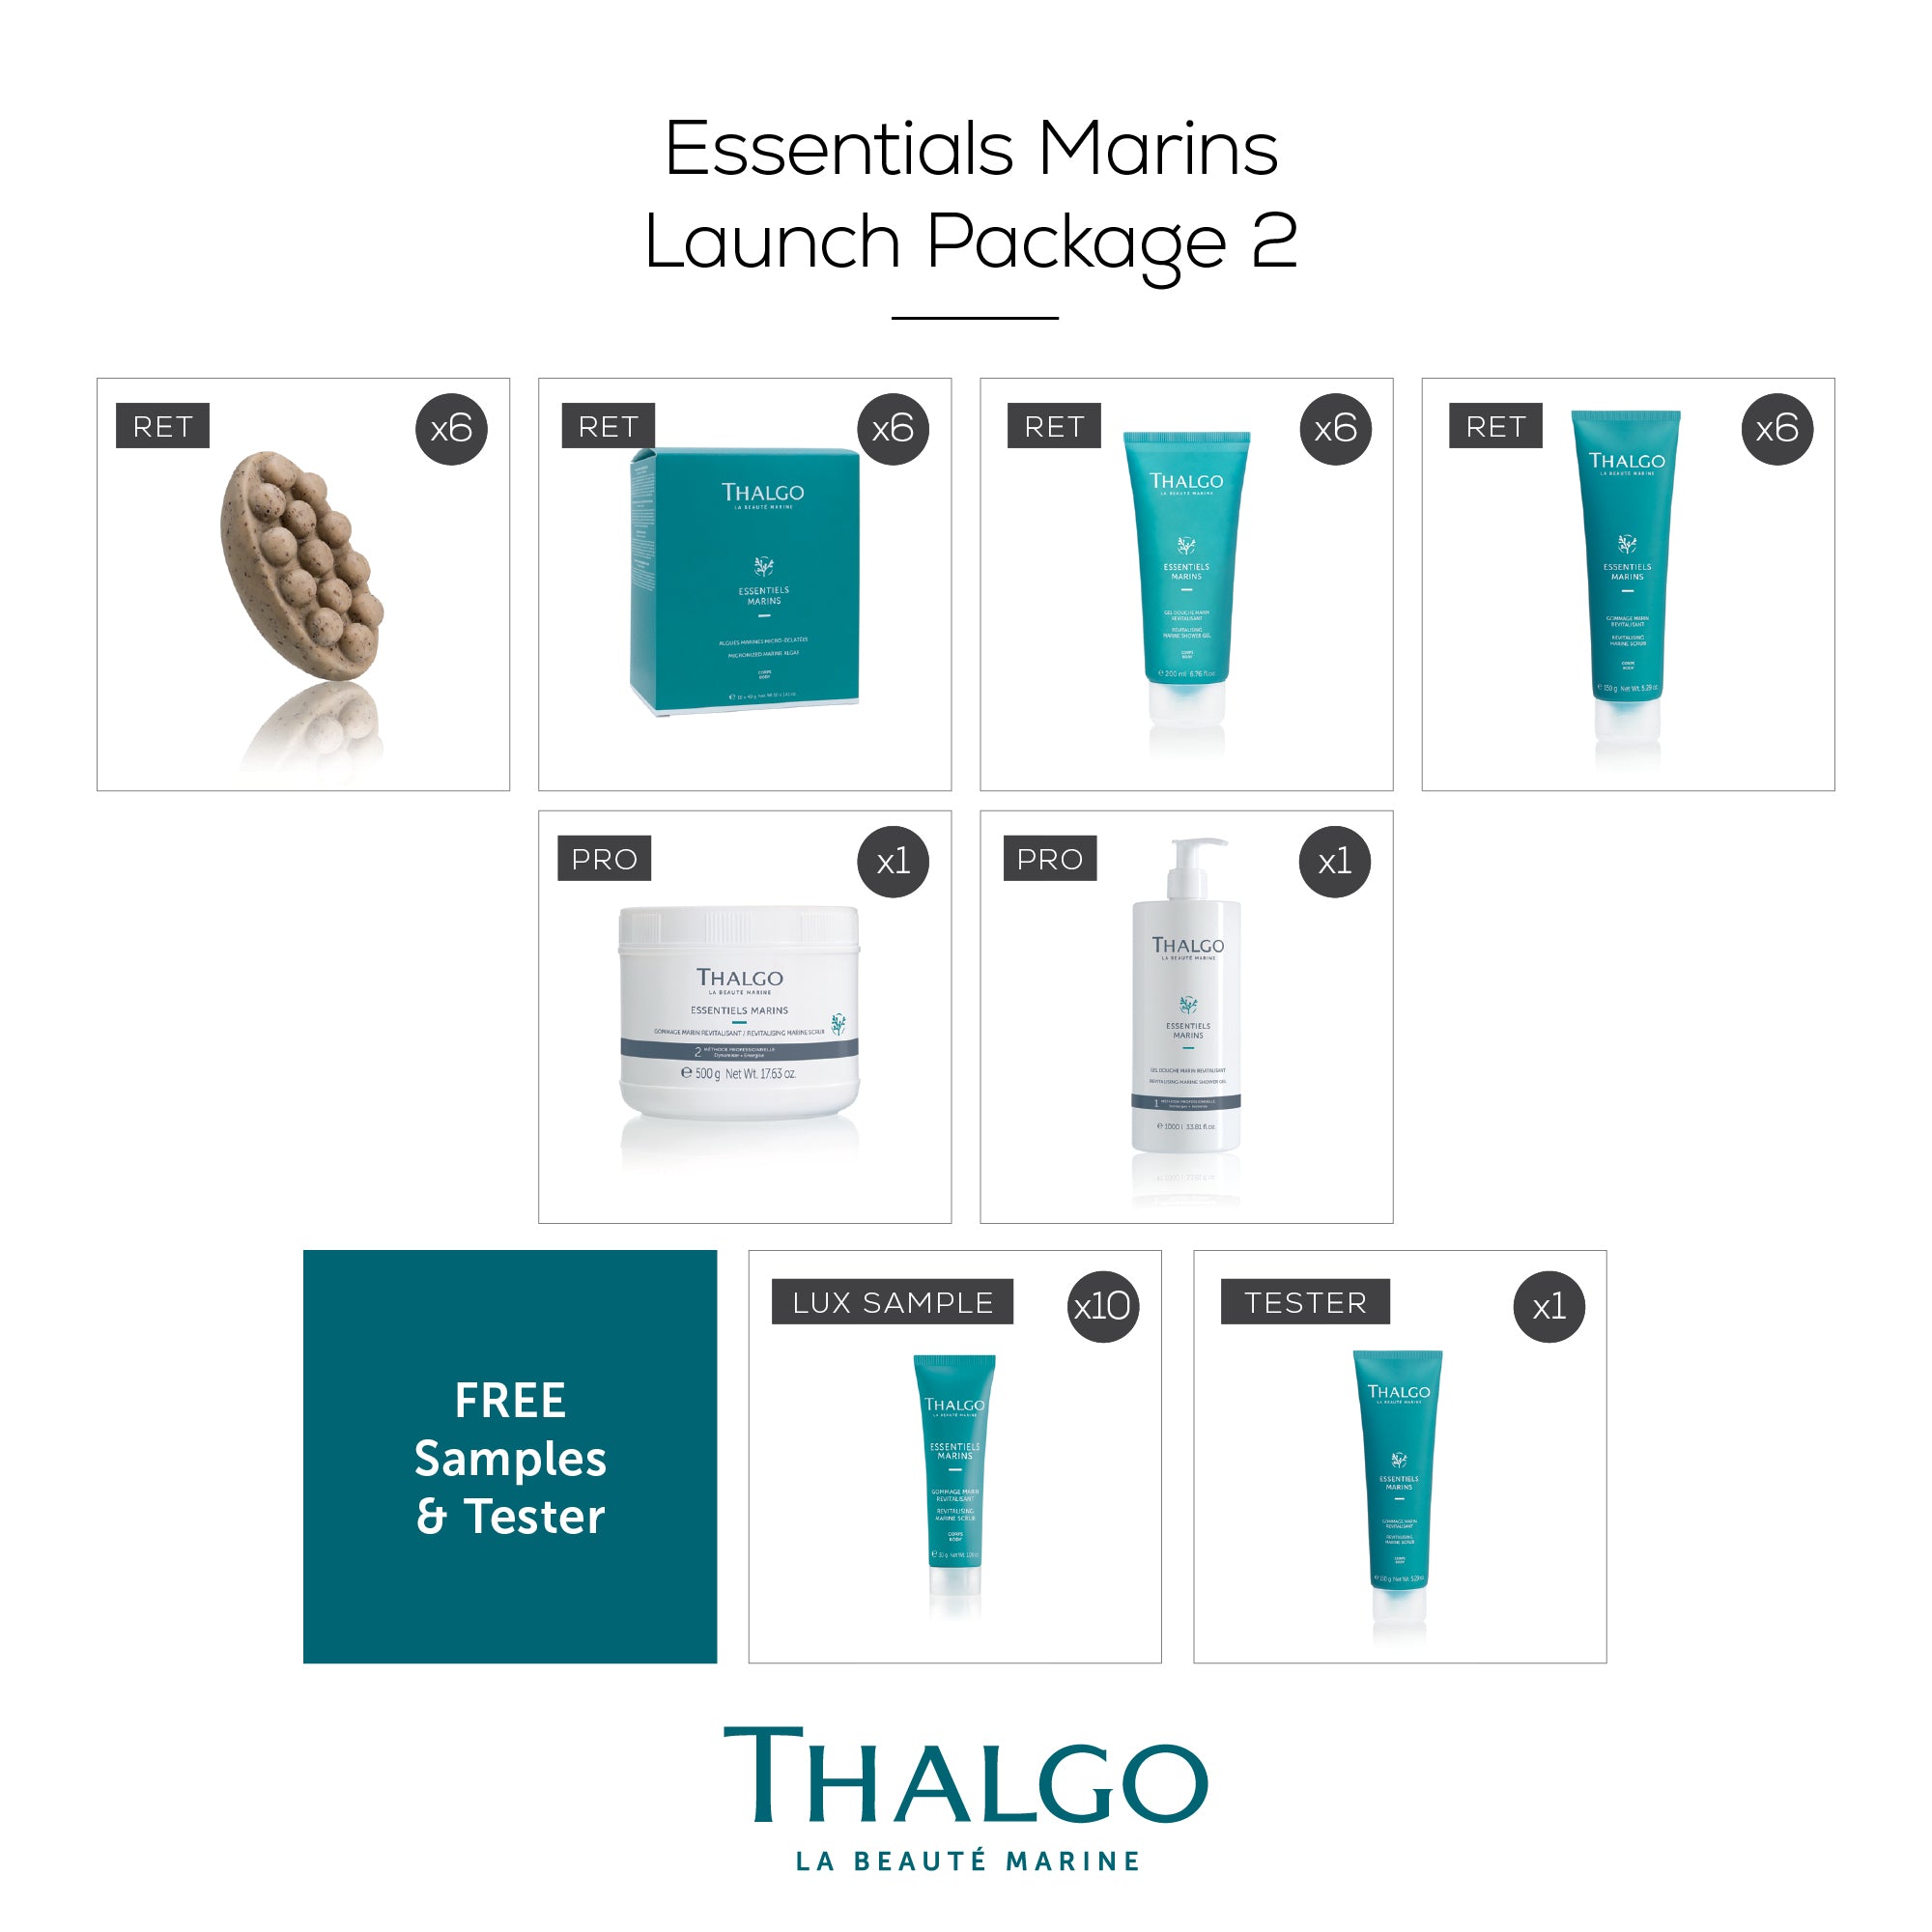 THALGO Essential Marins Package 2